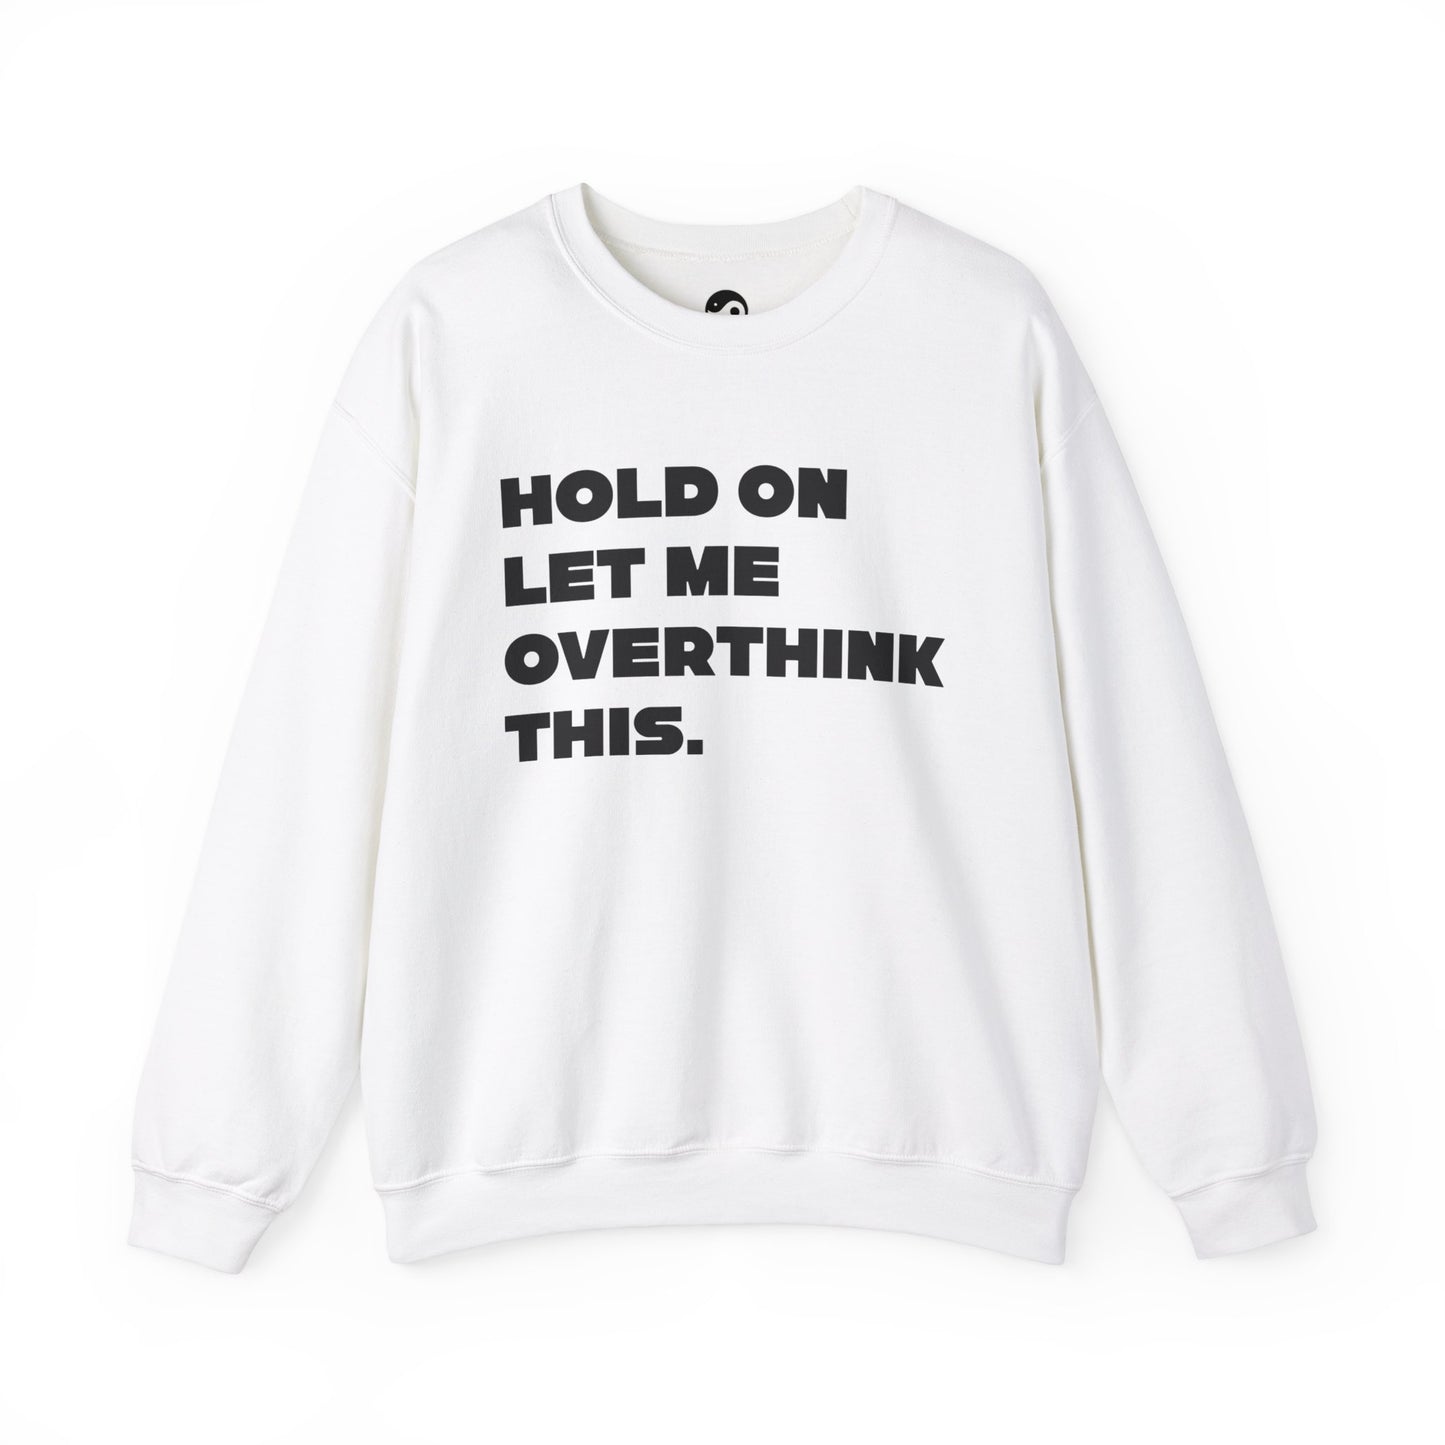 Hold On Let Me Overthink This. Unisex Sweatshirt